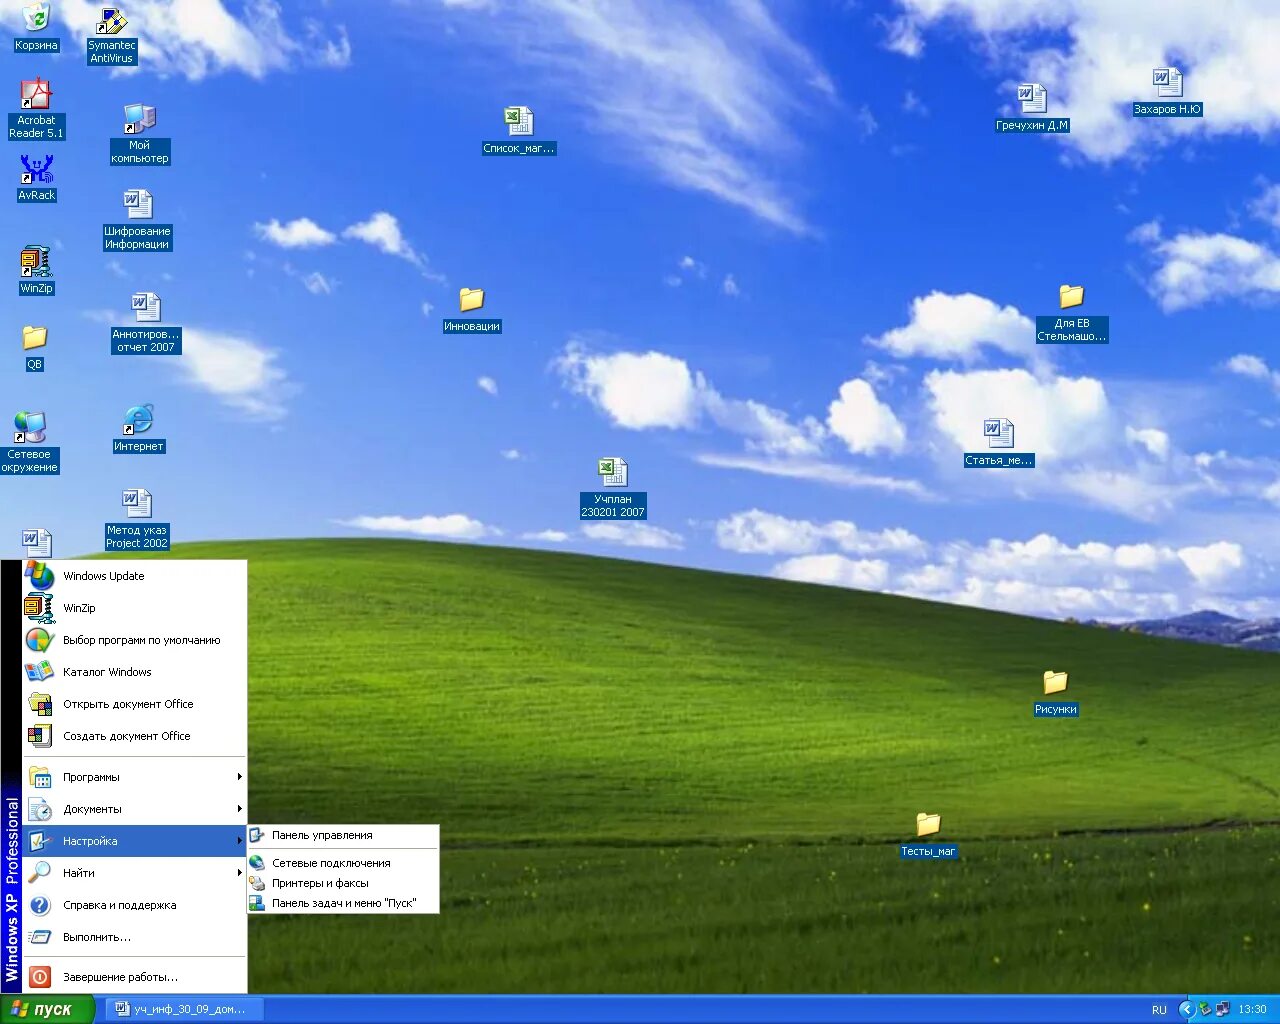 Windows kak. Операционная система виндовс хр. Виндовс хр Интерфейс. Графический Интерфейс виндовс XP. Виндовс икспи Интерфейс.